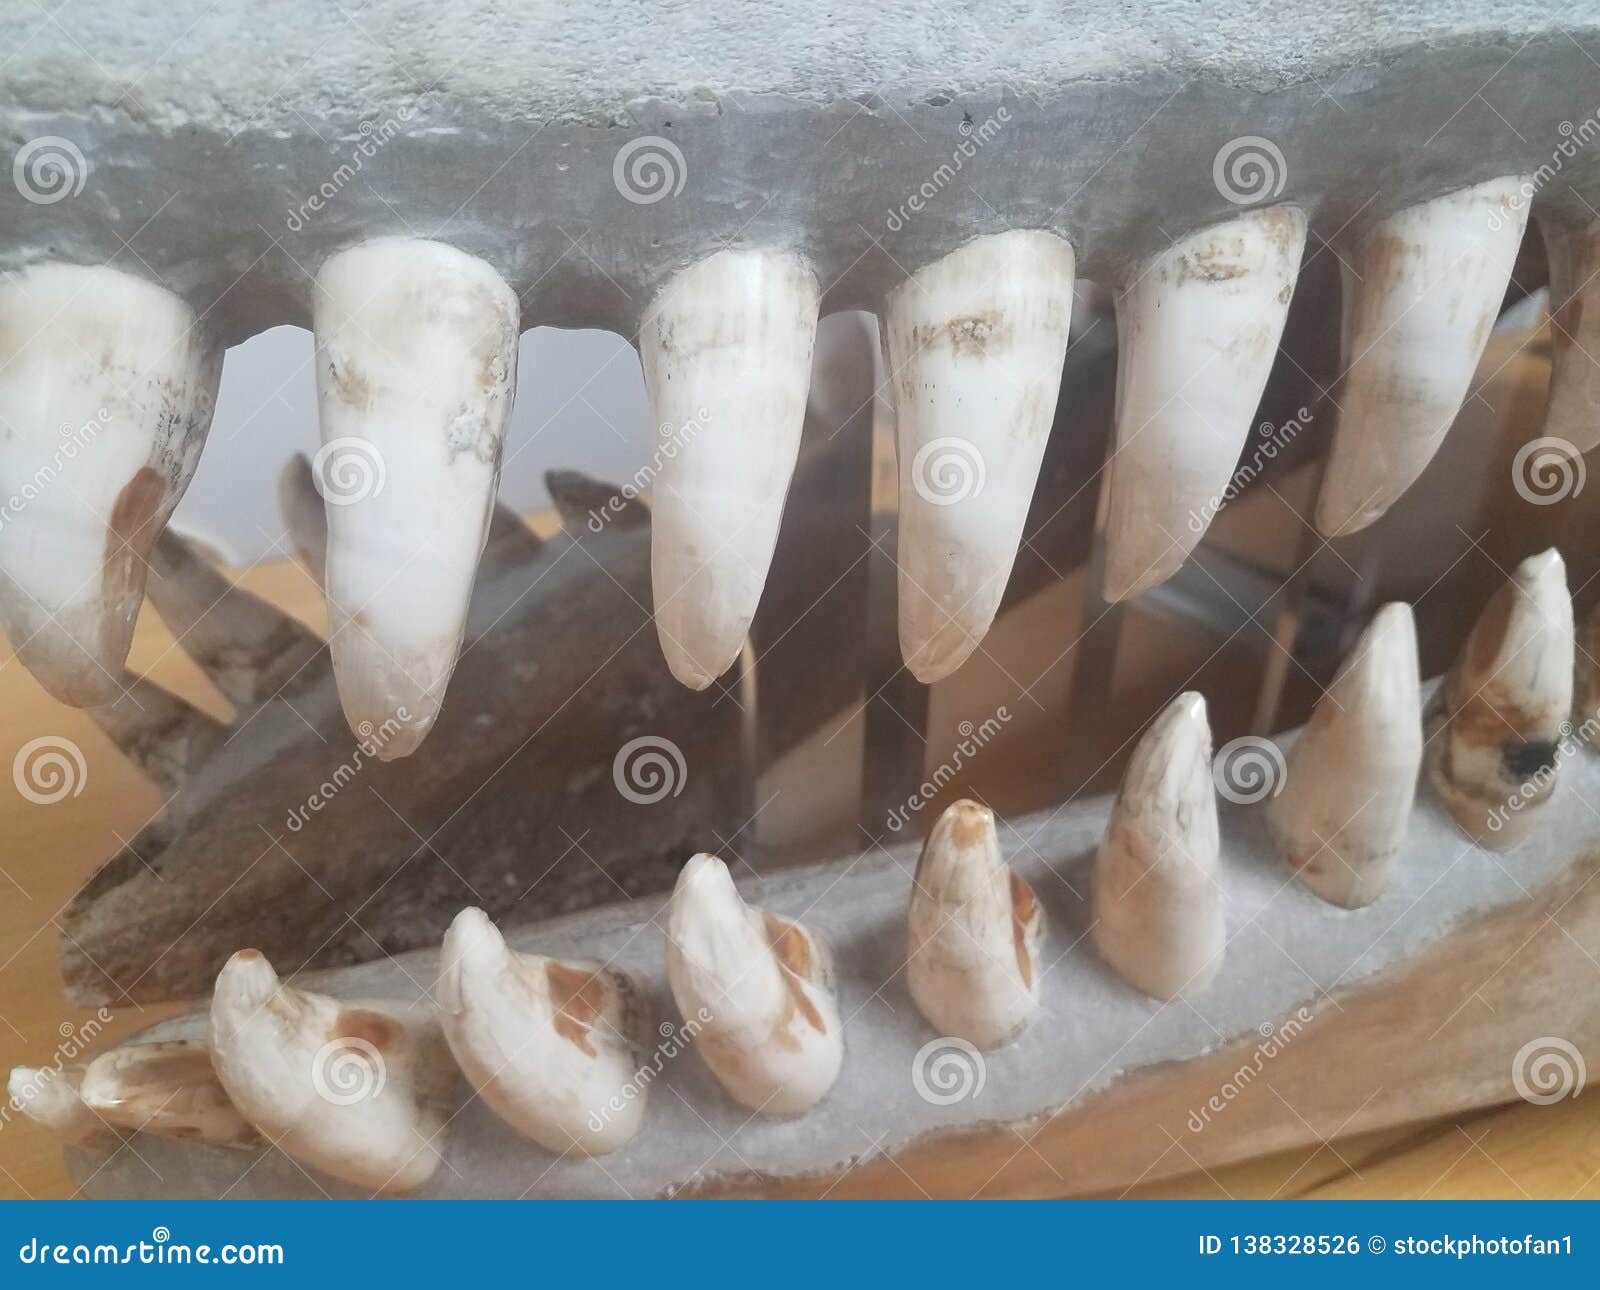 White and Sharp Animal Teeth Up Close Stock Photo - Image of tearing, teeth:  138328526